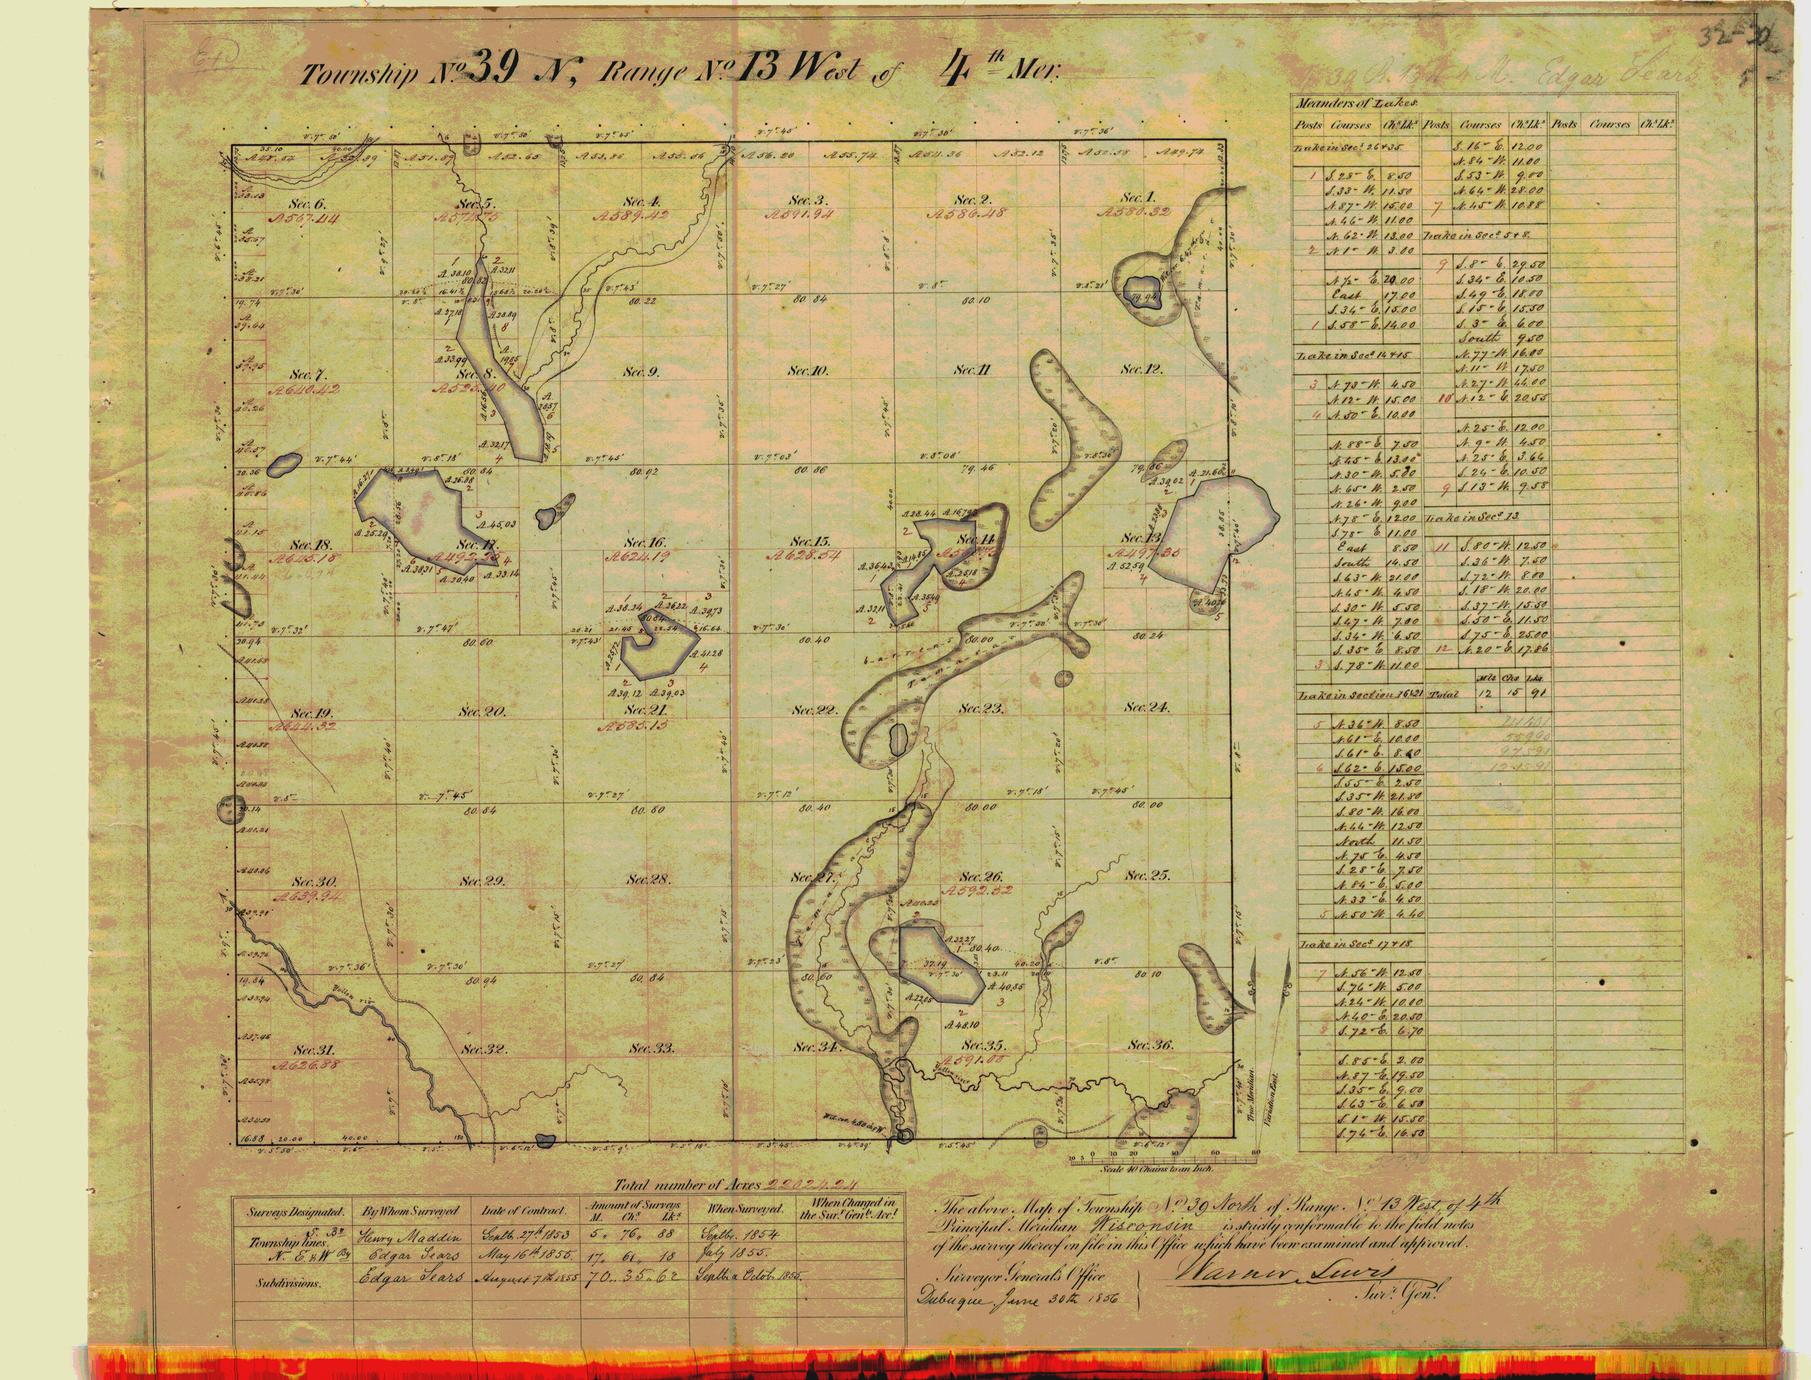 [Public Land Survey System map: Wisconsin Township 39 North, Range 13 West]